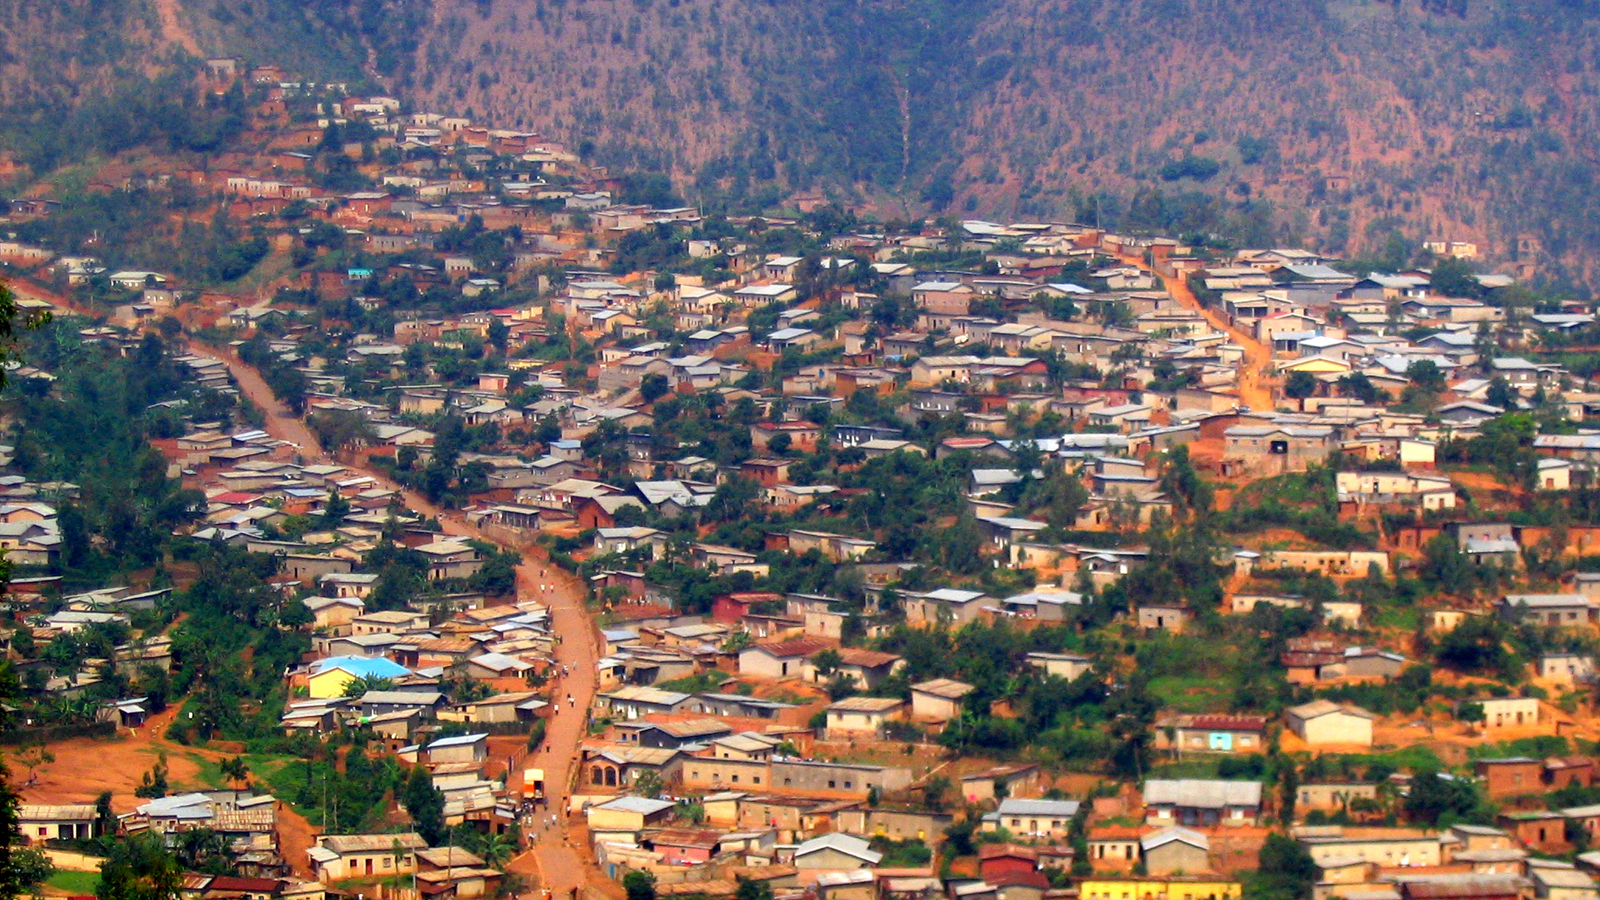 Photograph of the city Kigali, Rwanda